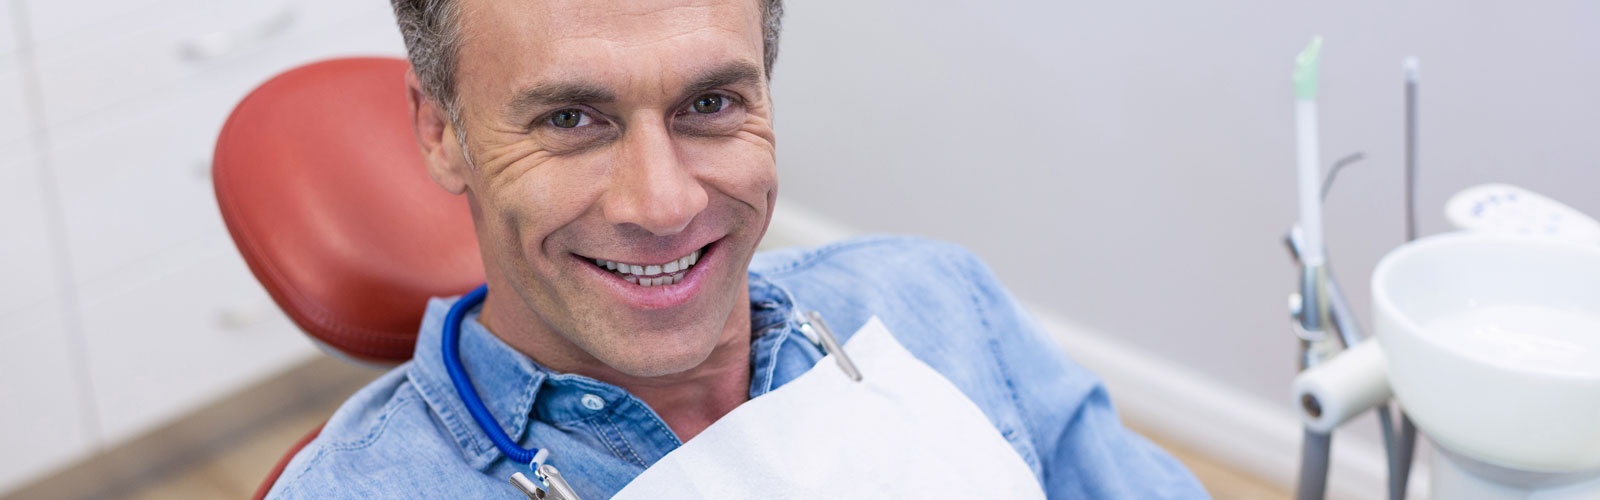 A man getting ready for dental Implants